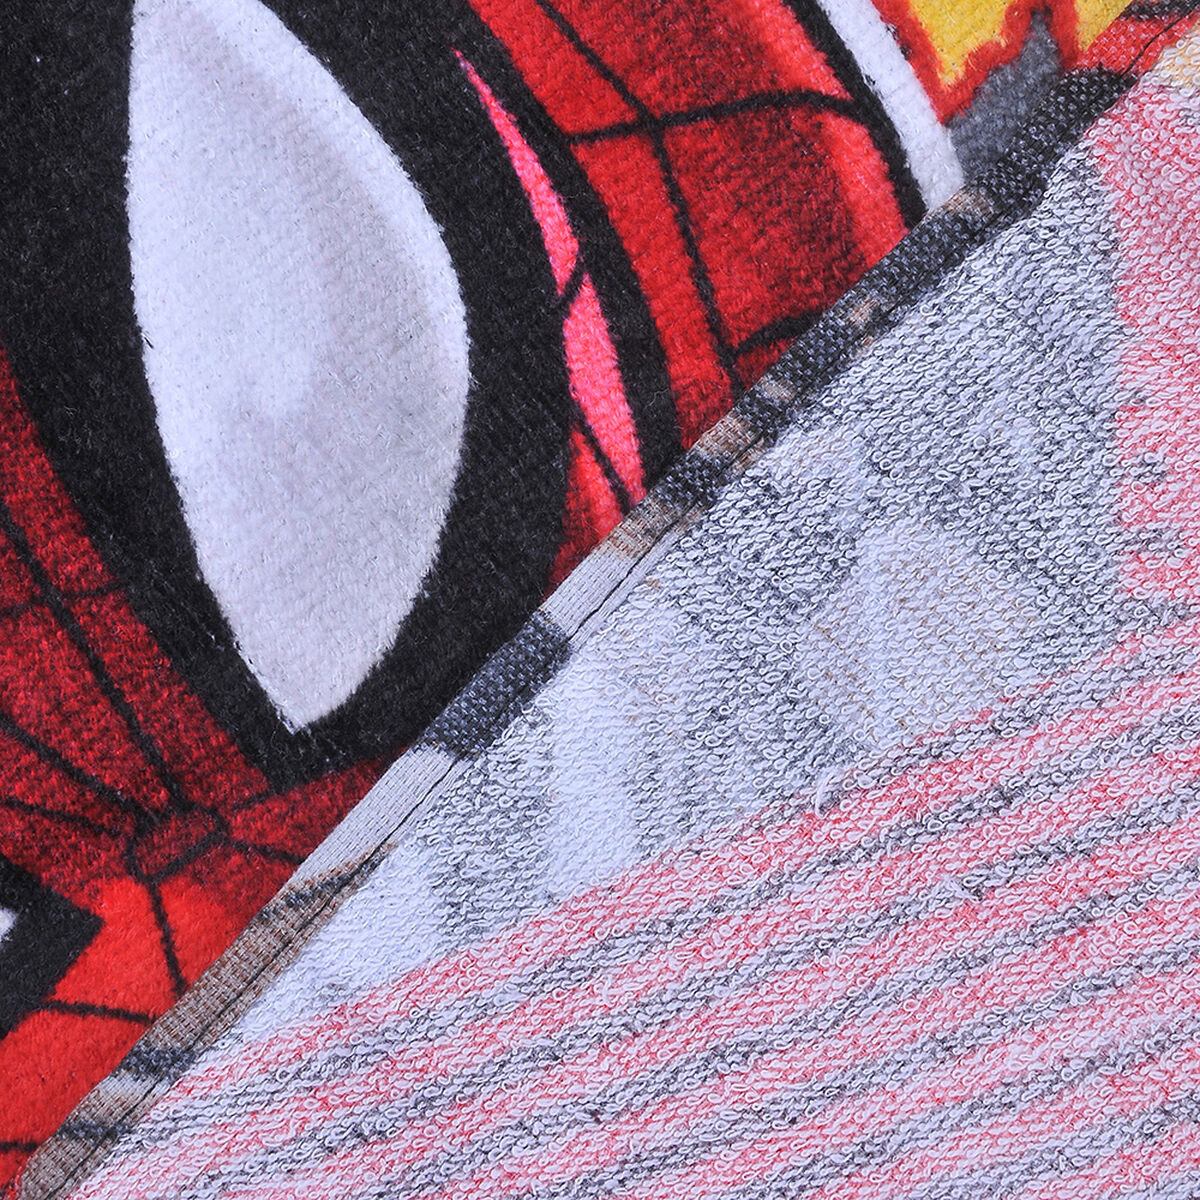 Toalla de Playa Infantil Spiderman Pelea 70 x 140 cm